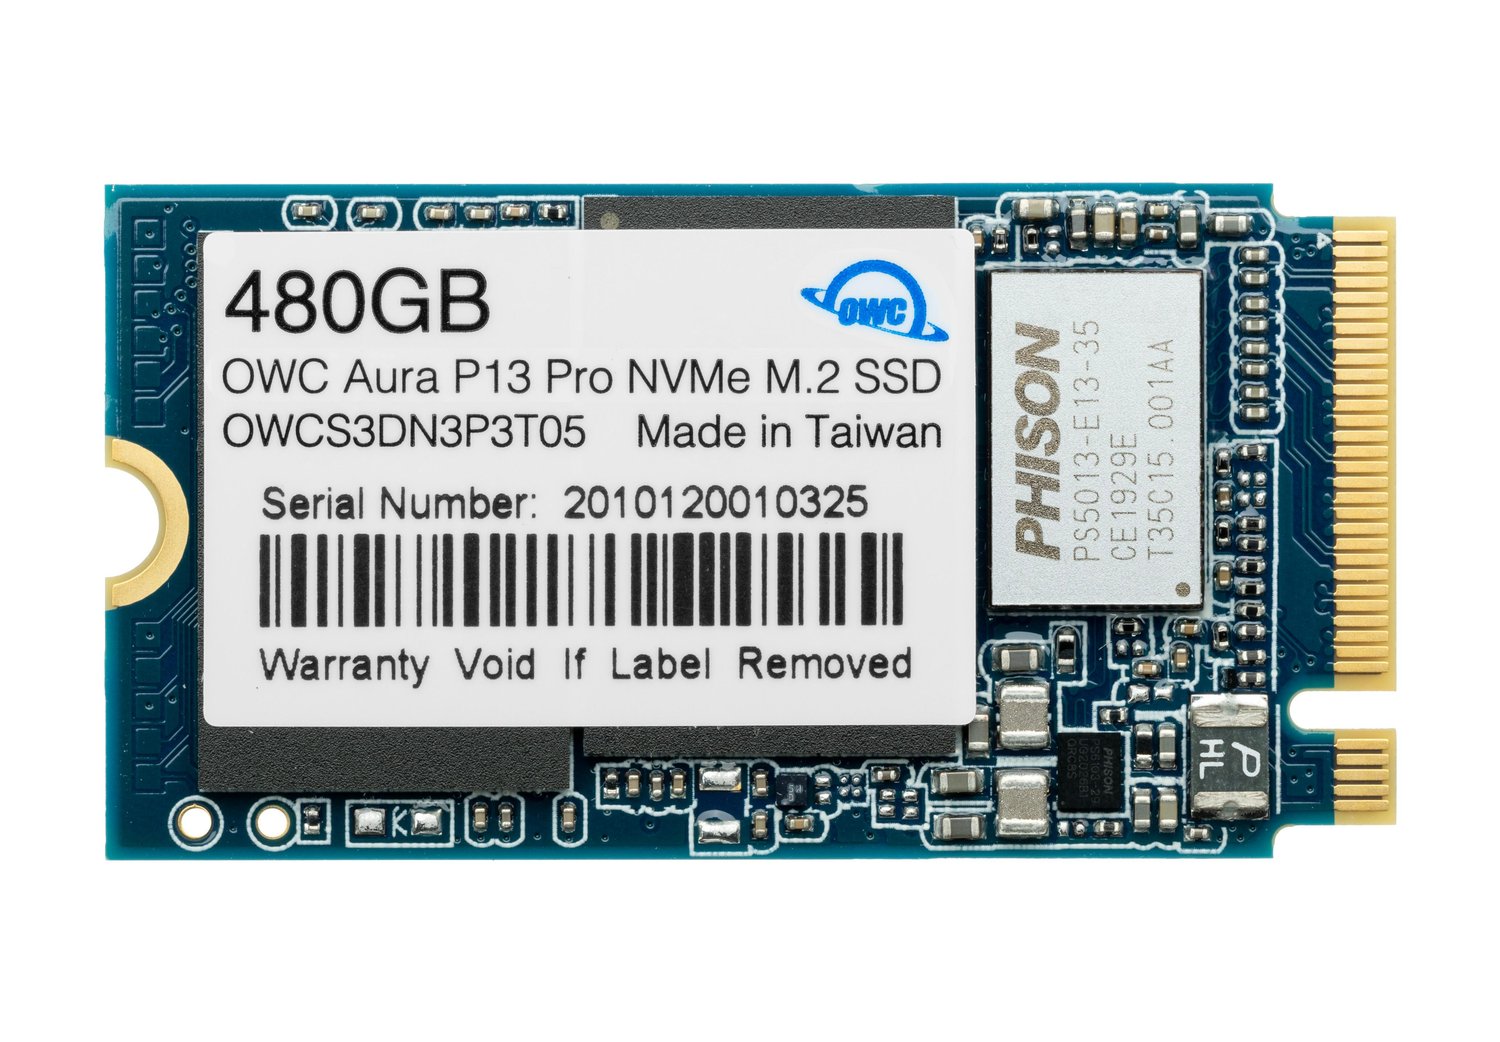 Forfærde fiber Rastløs OWC 480GB Aura P13 Pro PCIe 3.0 NVMe M.2 2242 SSD at MacSales.com